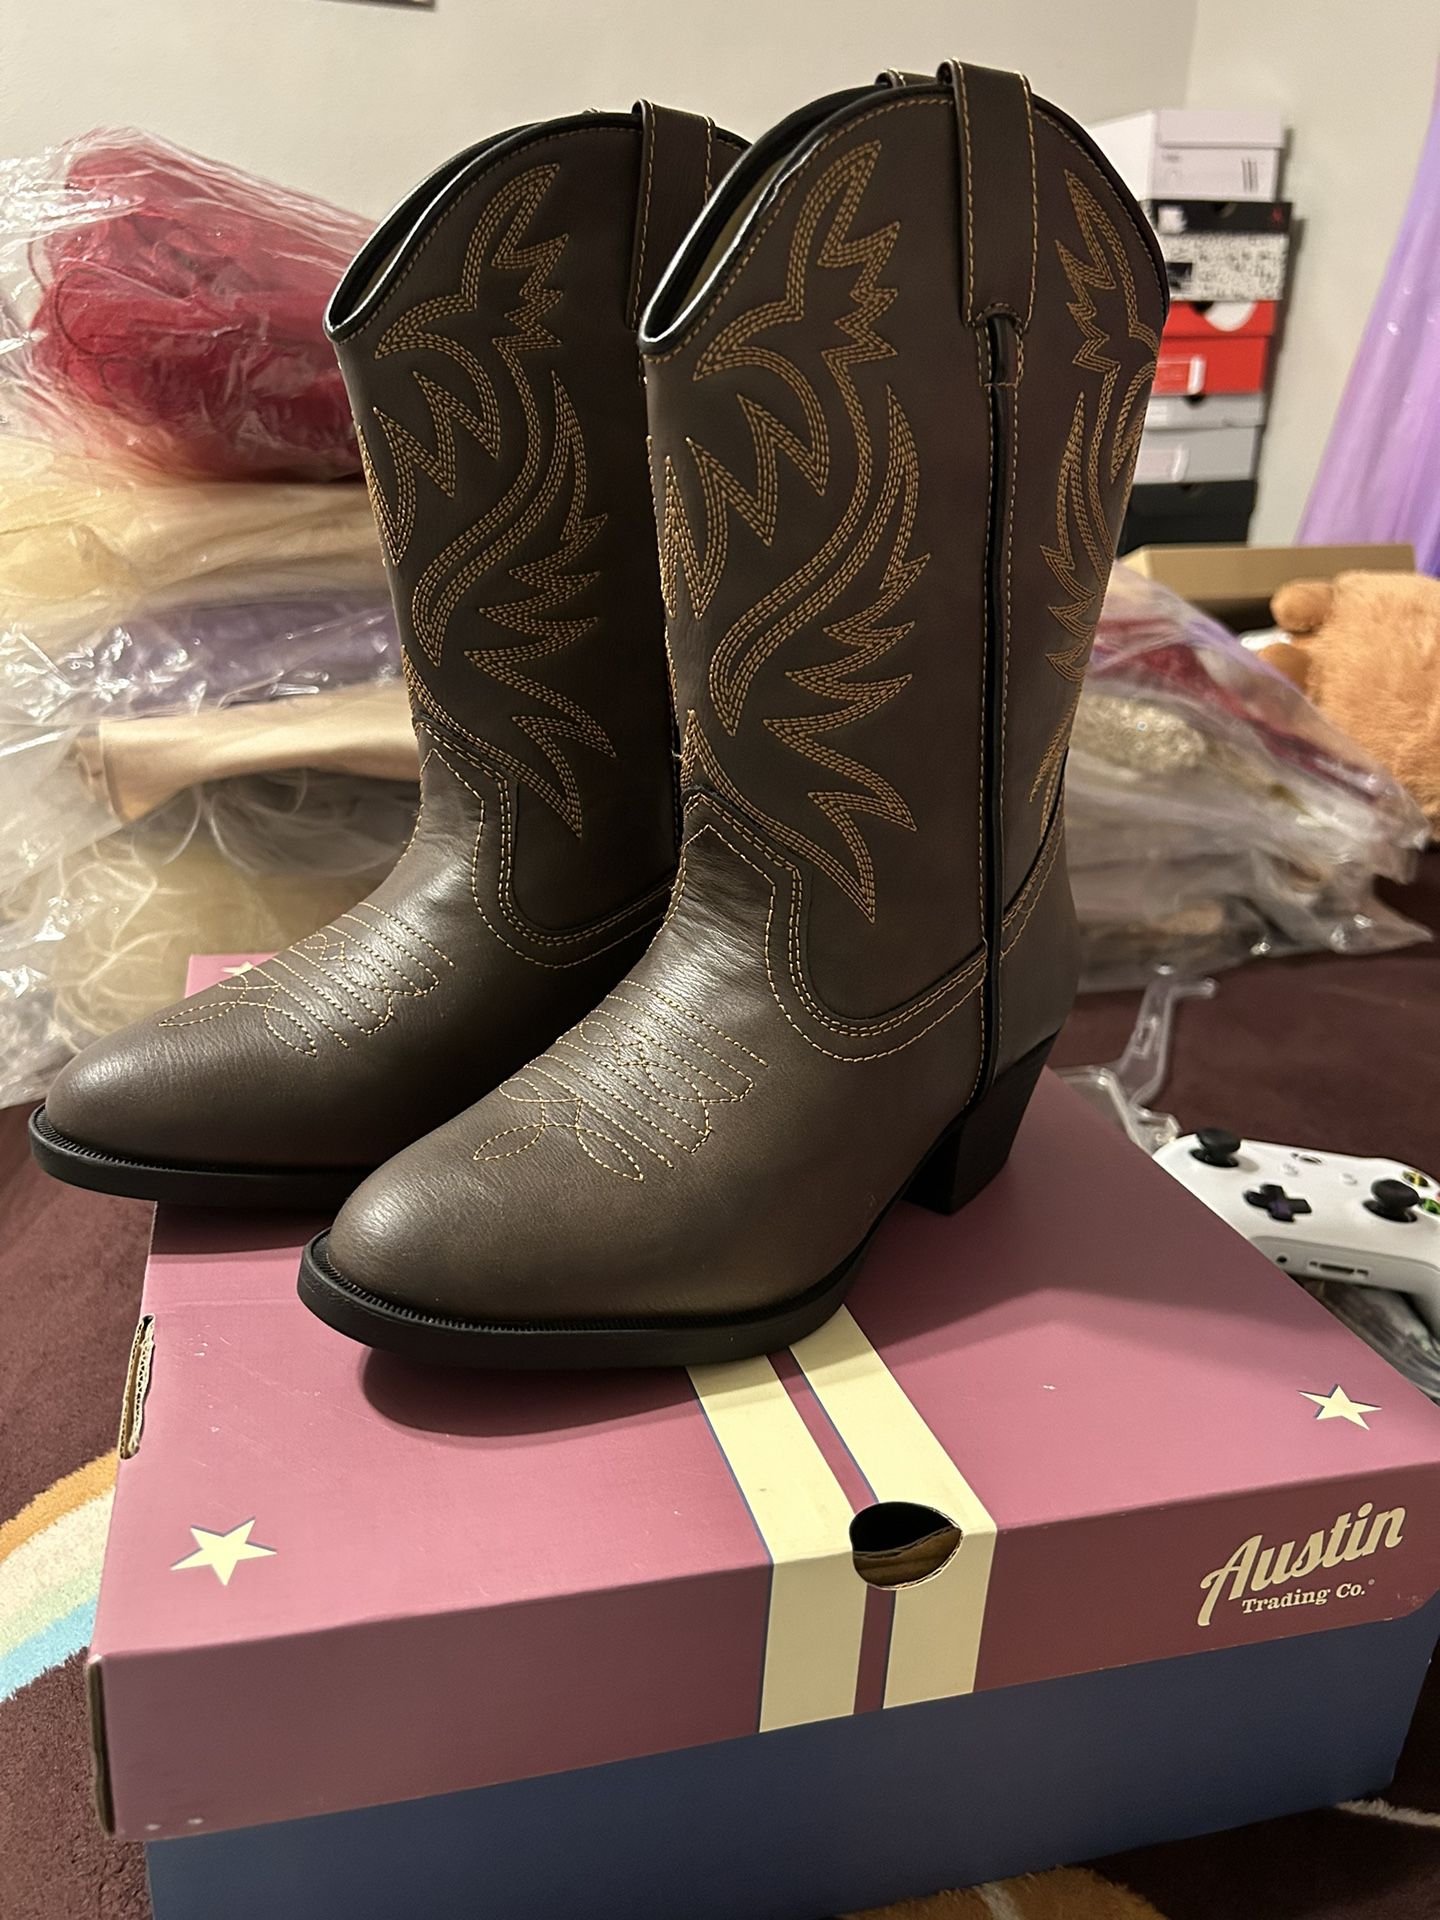 MK Rain Boots for Sale in San Antonio, TX - OfferUp